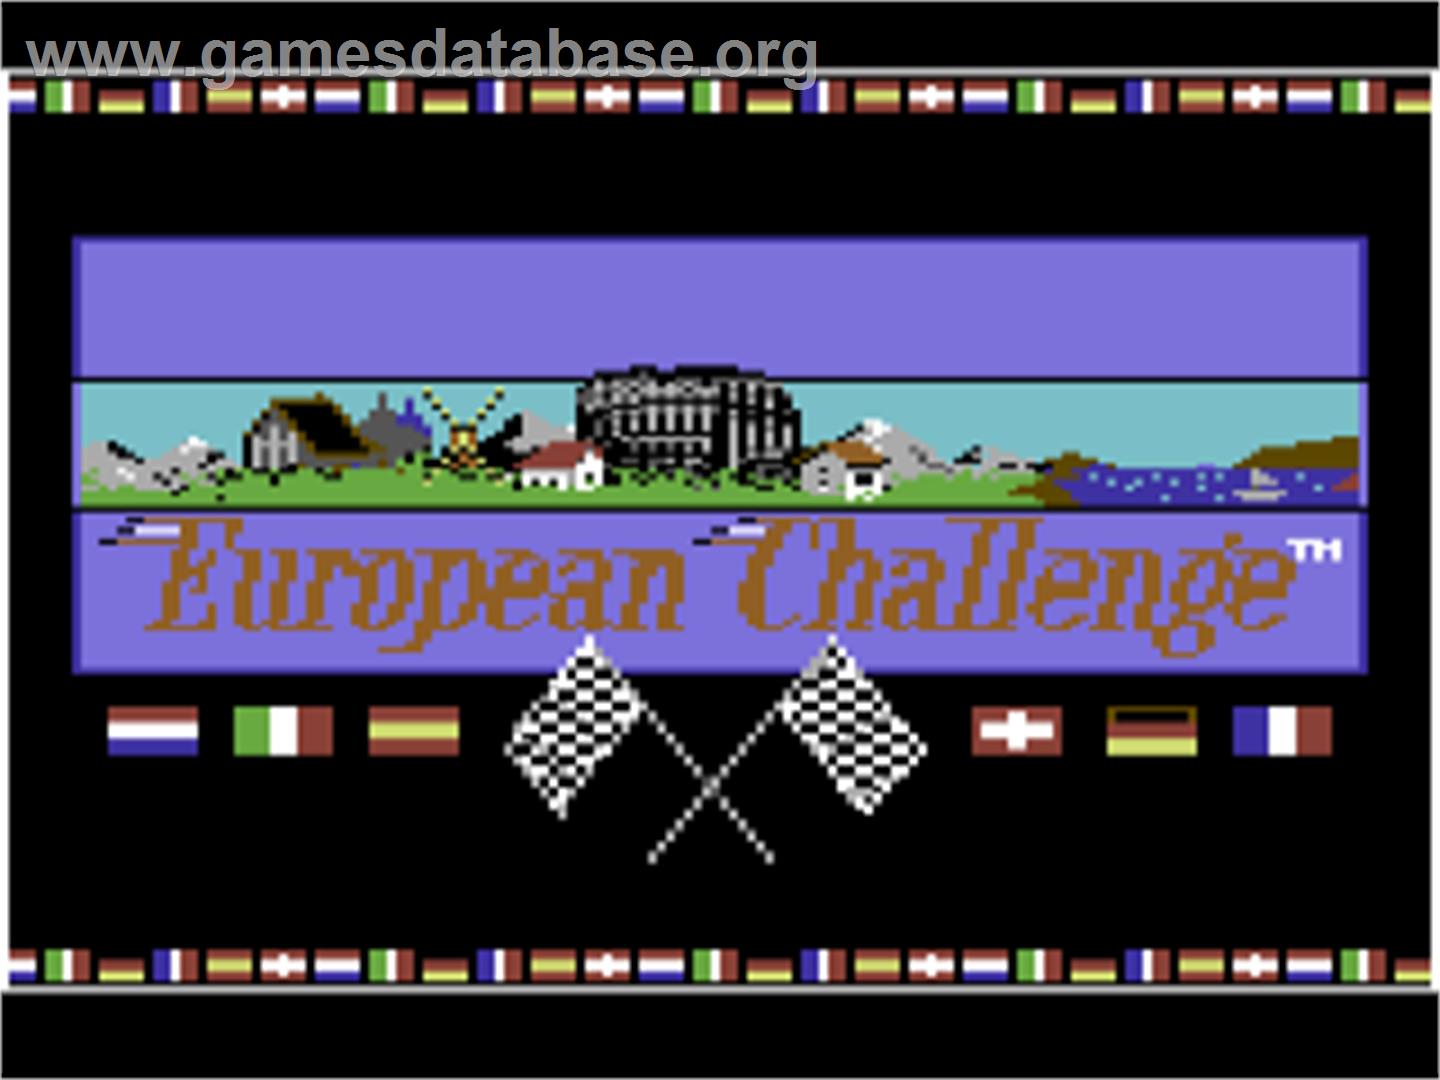 Test Drive II Scenery Disk: European Challenge - Commodore 64 - Artwork - Title Screen